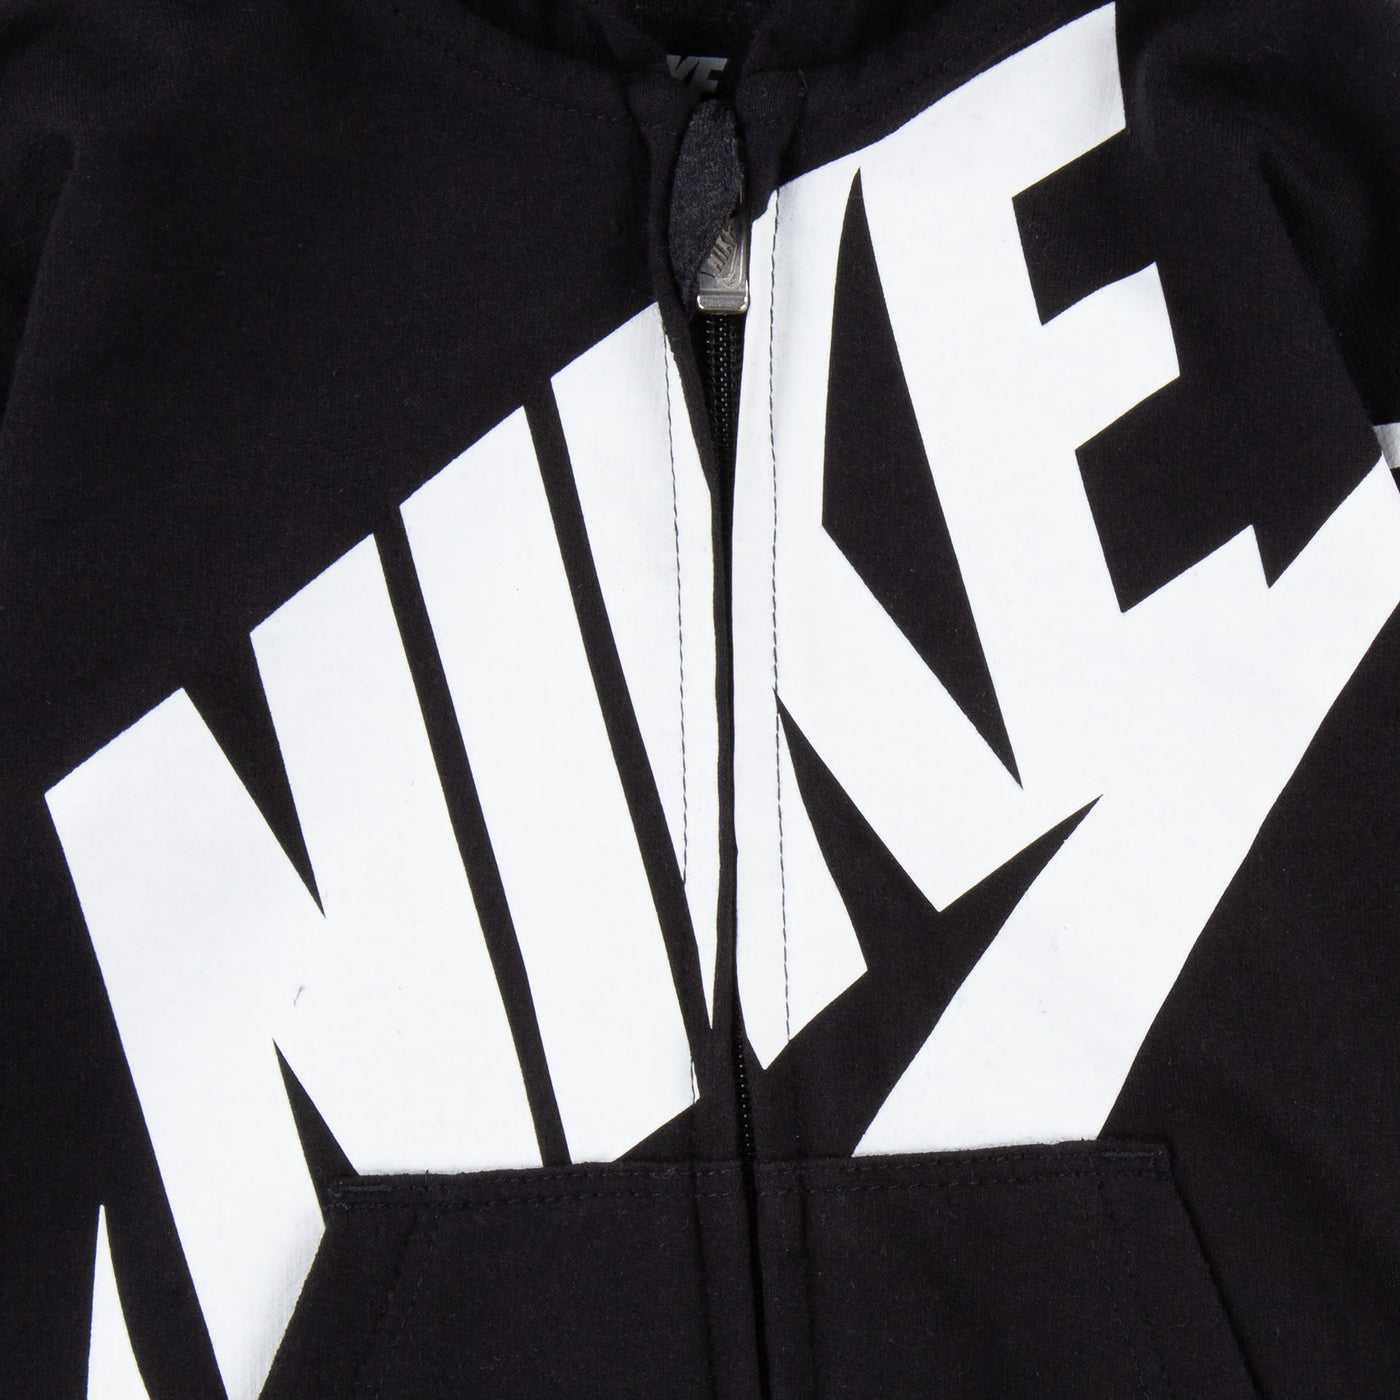 Nike Black Futura Hooded Coverall